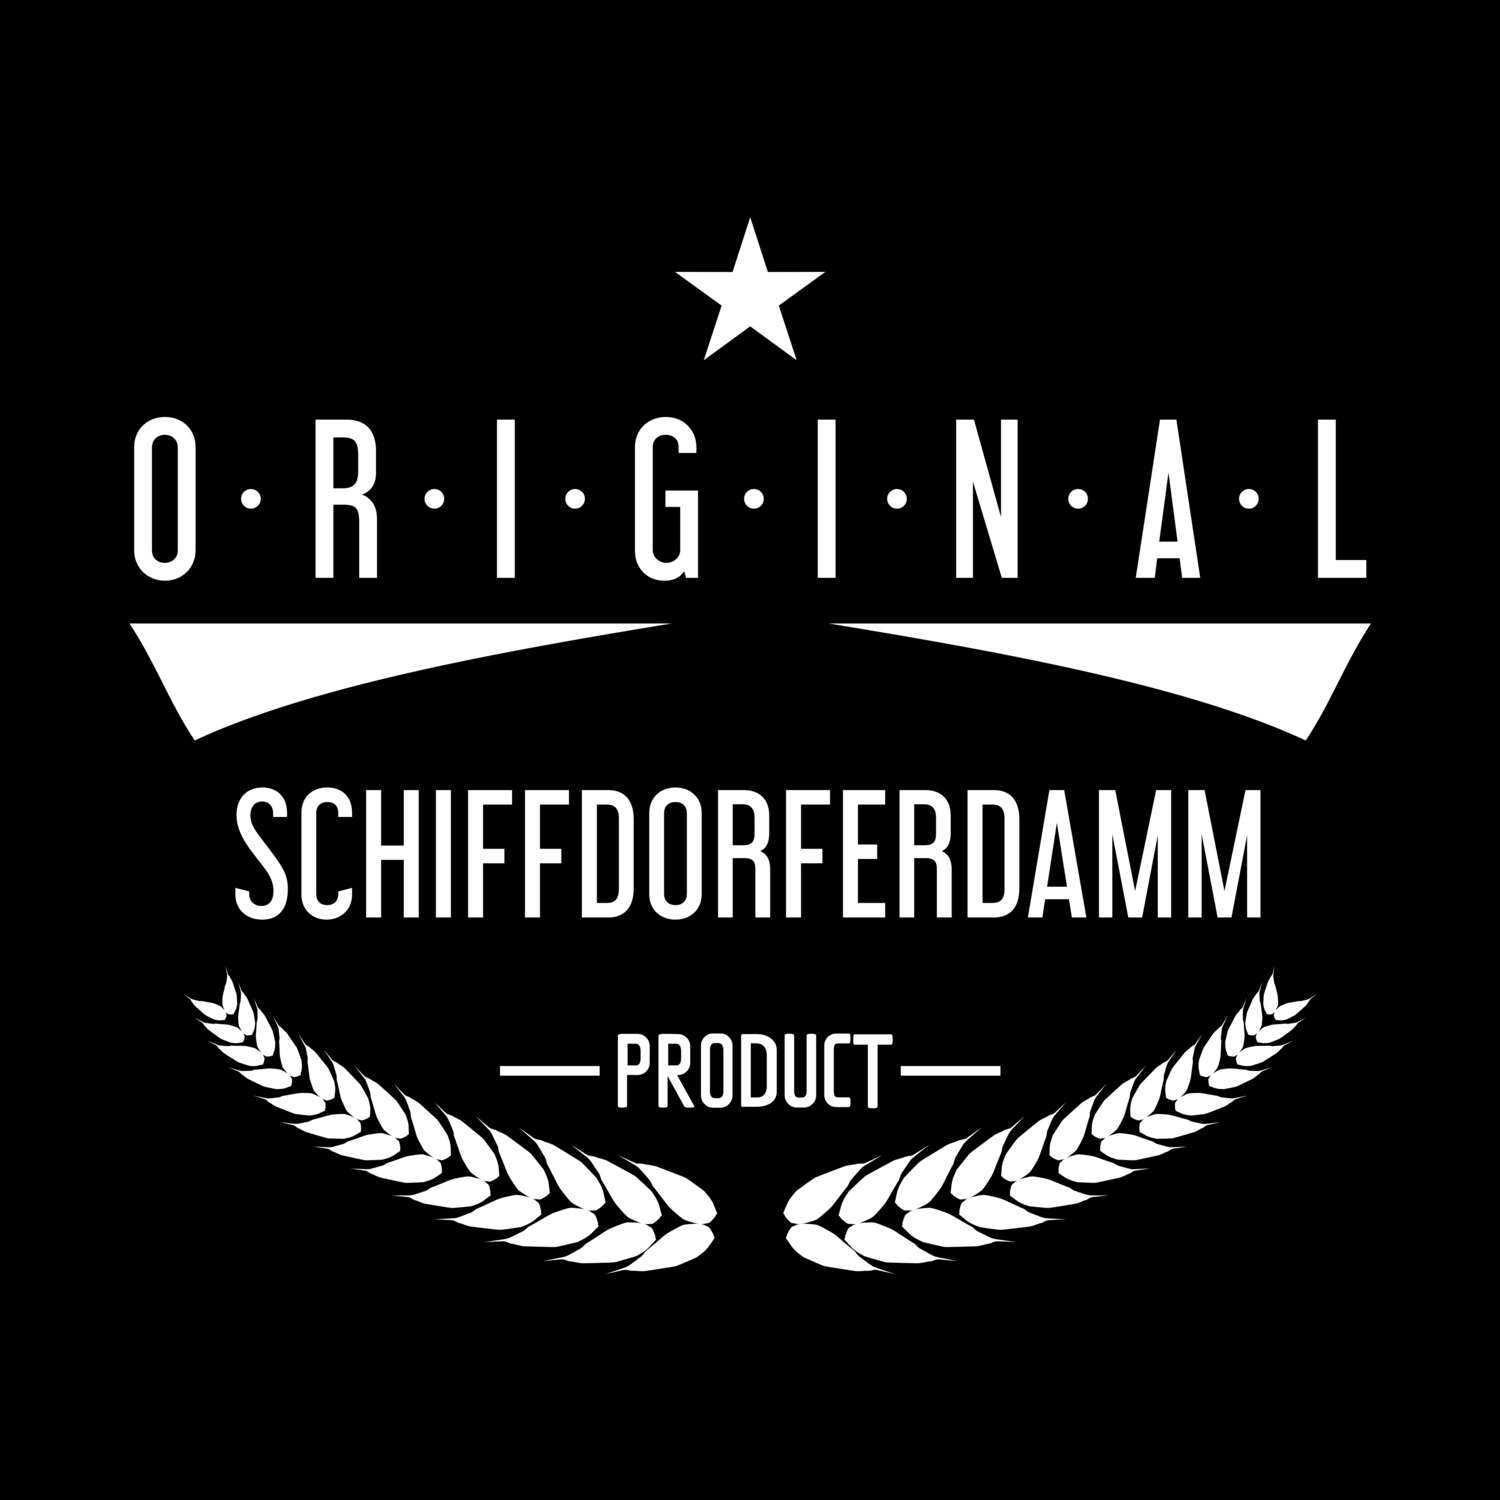 Schiffdorferdamm T-Shirt »Original Product«